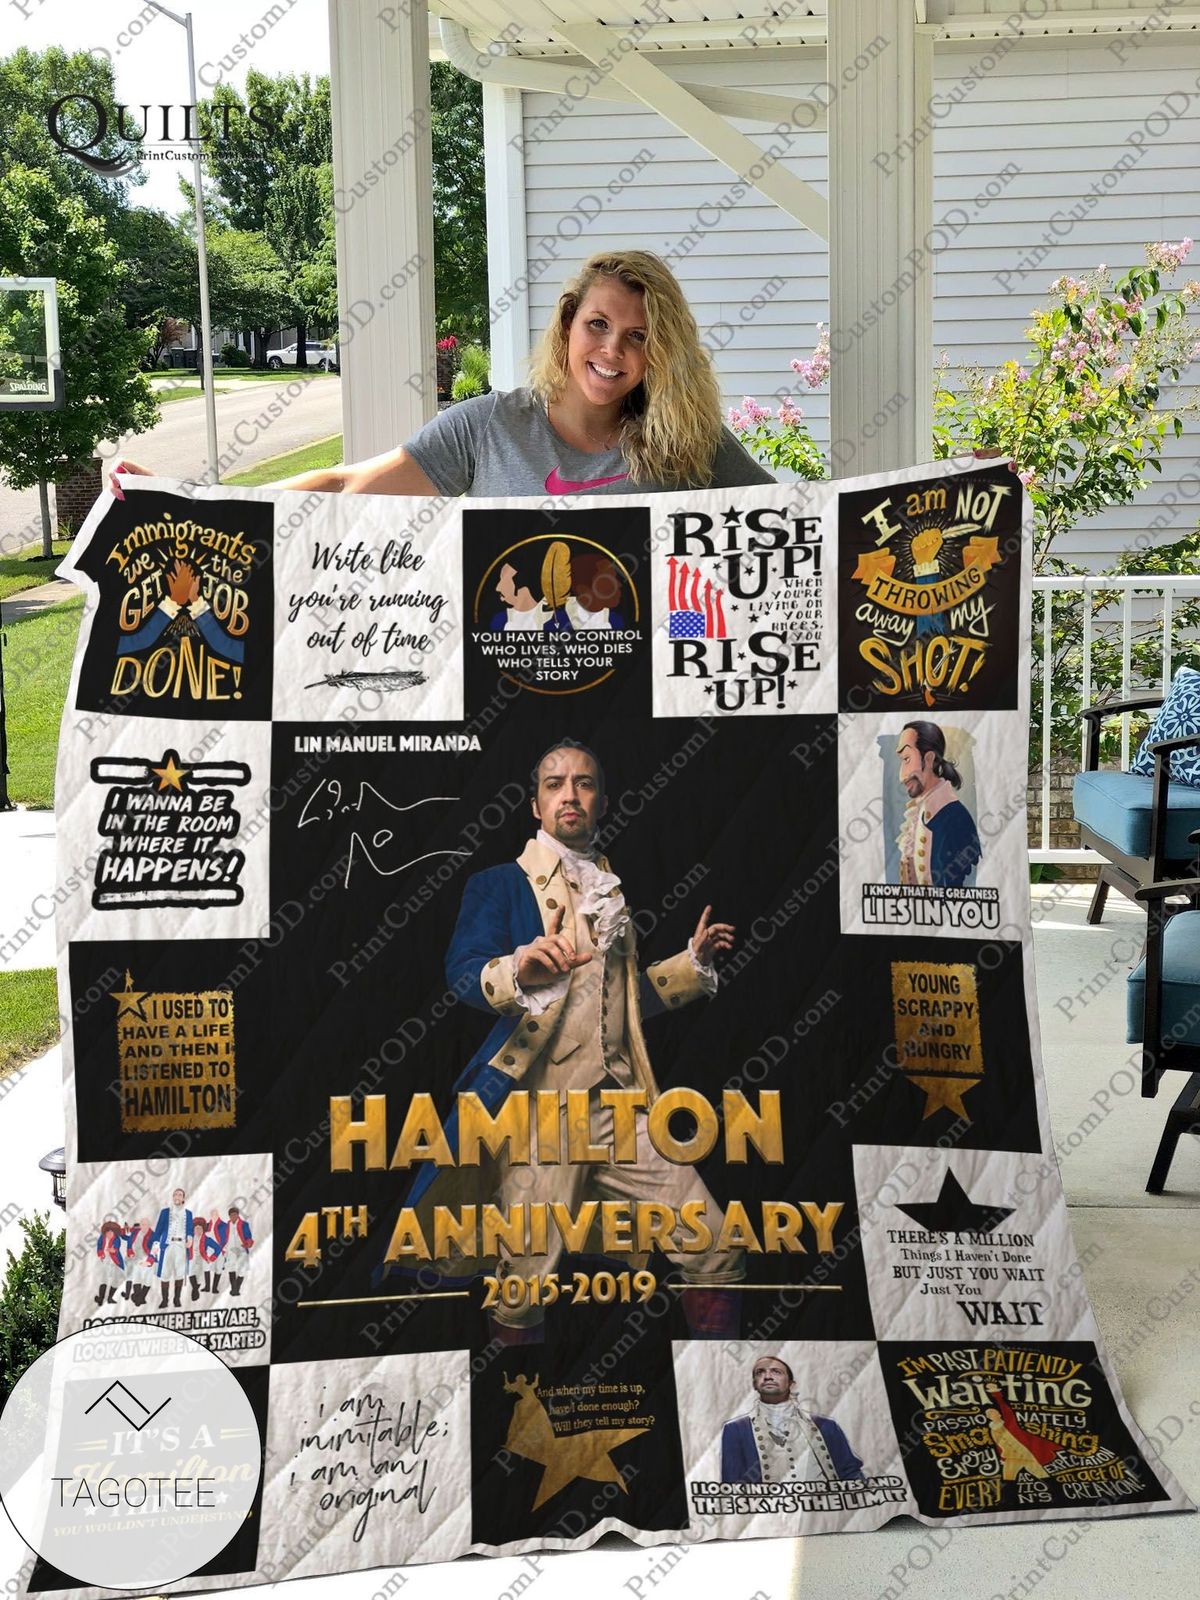 Broadway Hamilton Musical 4th Anniversary 2015-2019 Quilt Blanket